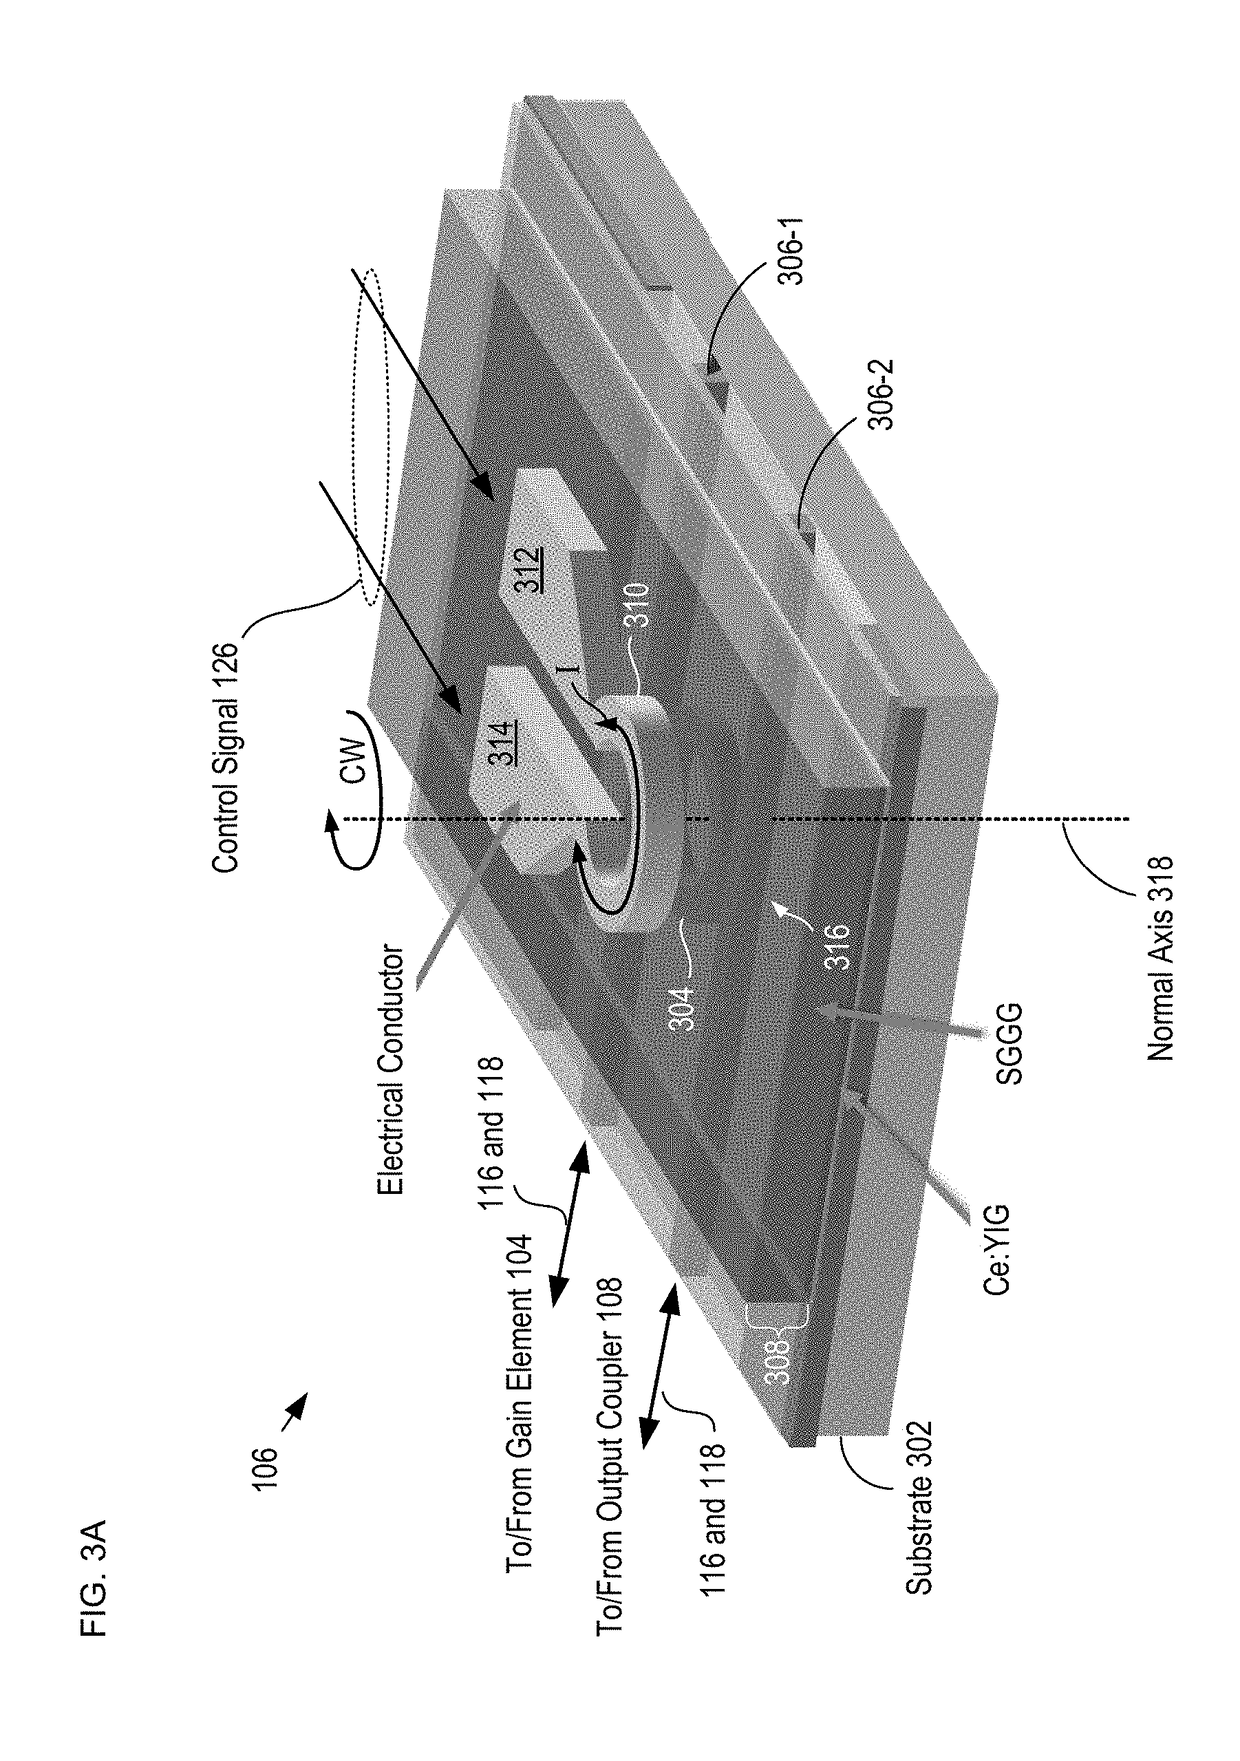 Orthogonal-mode laser gyroscope